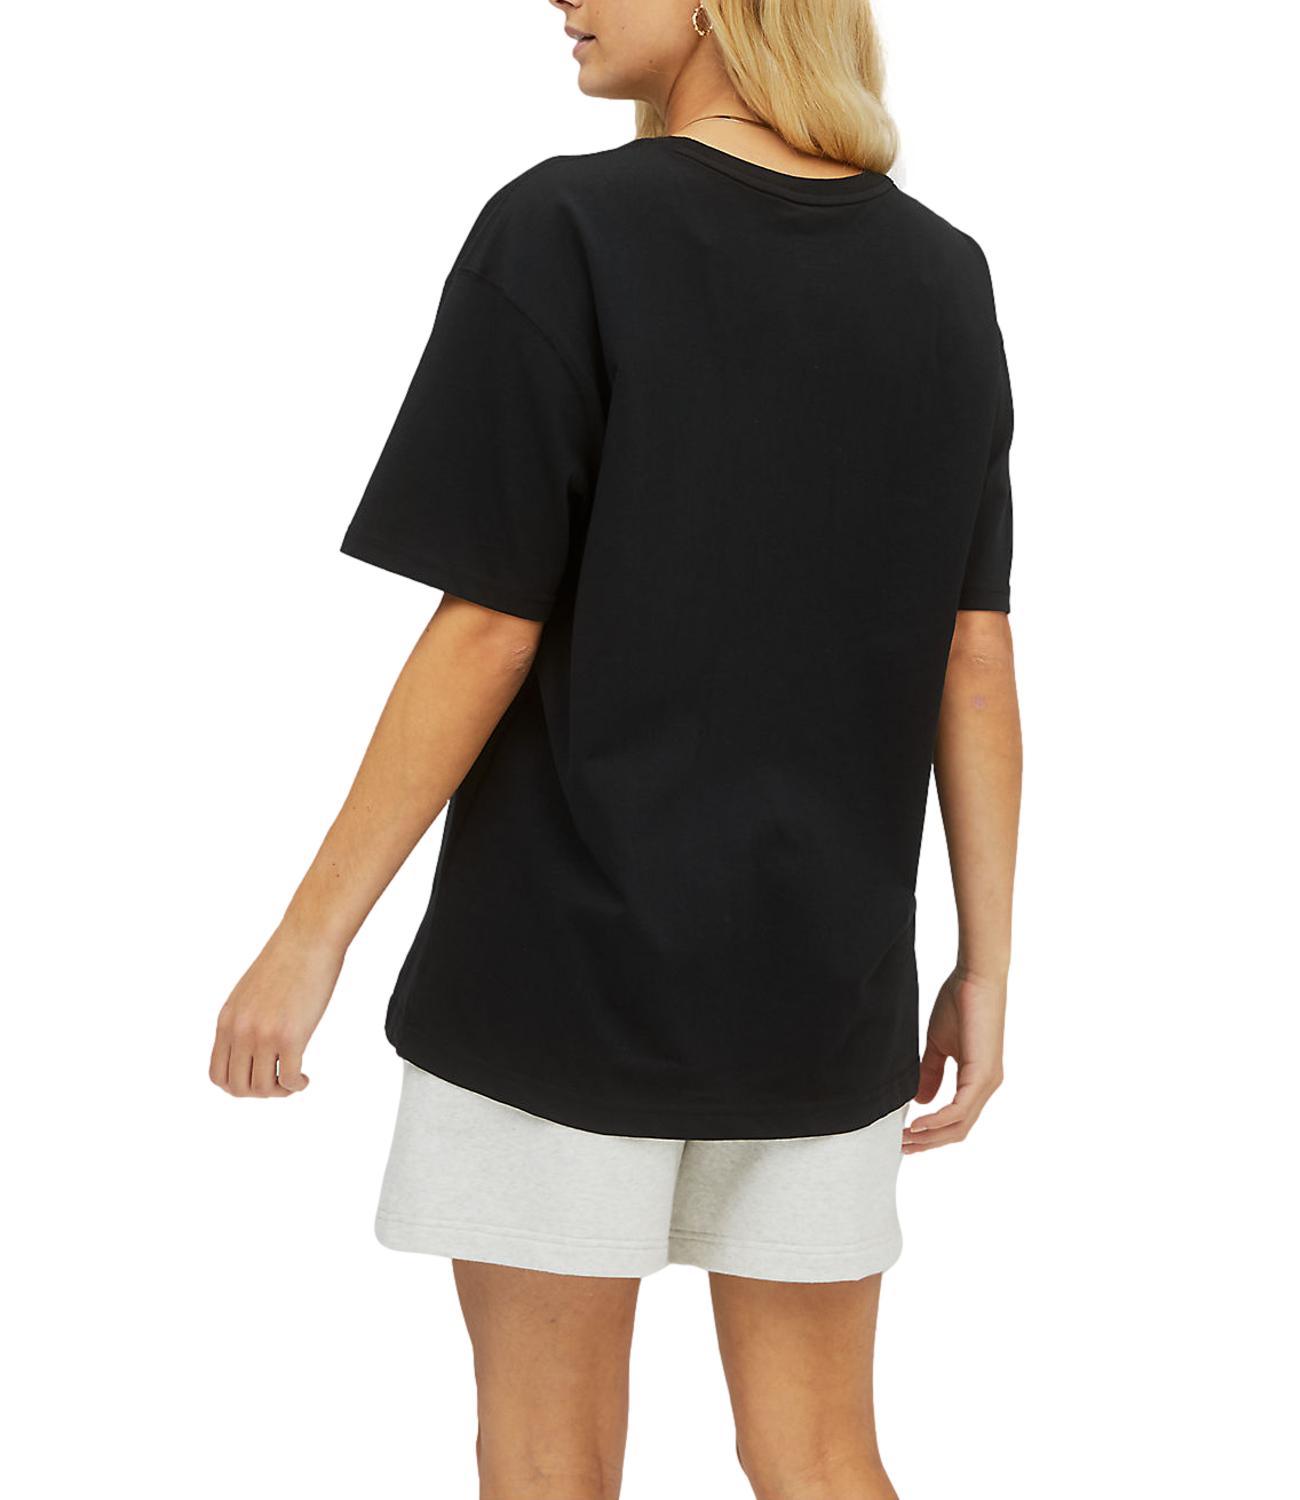 T-shirt New Balance unisex uomo donna nera in cotone